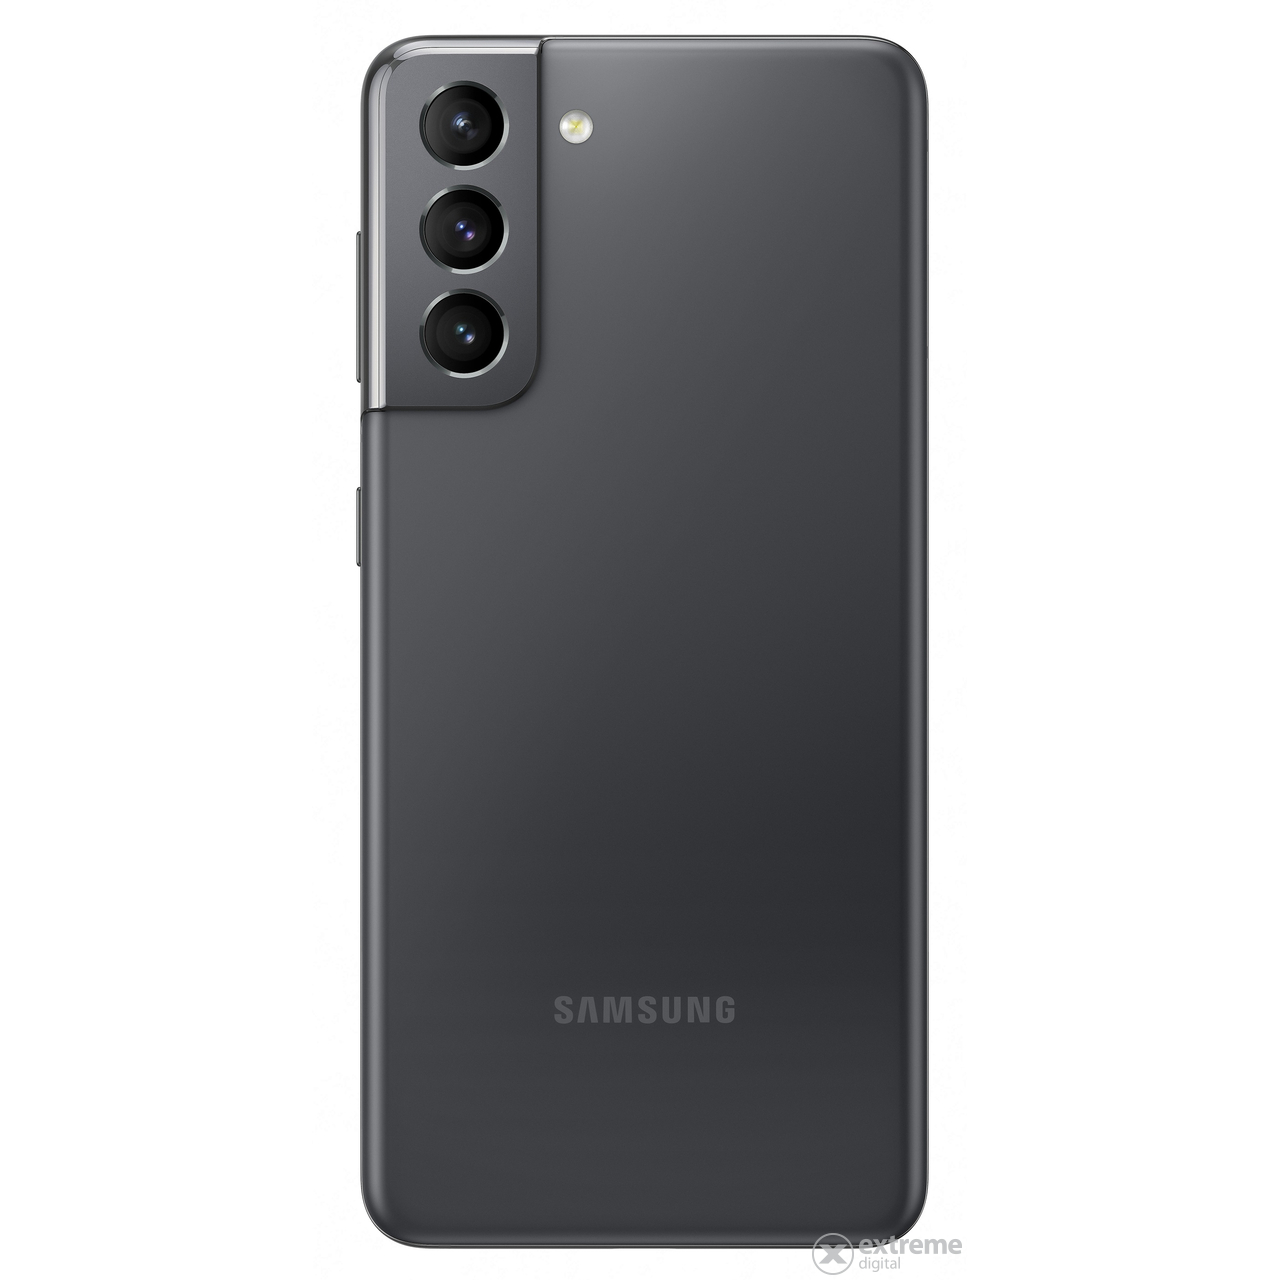 Samsung Galaxy S21 5G 8GB/128GB Dual SIM (SM-G991) pametni telefon, Fantom siva